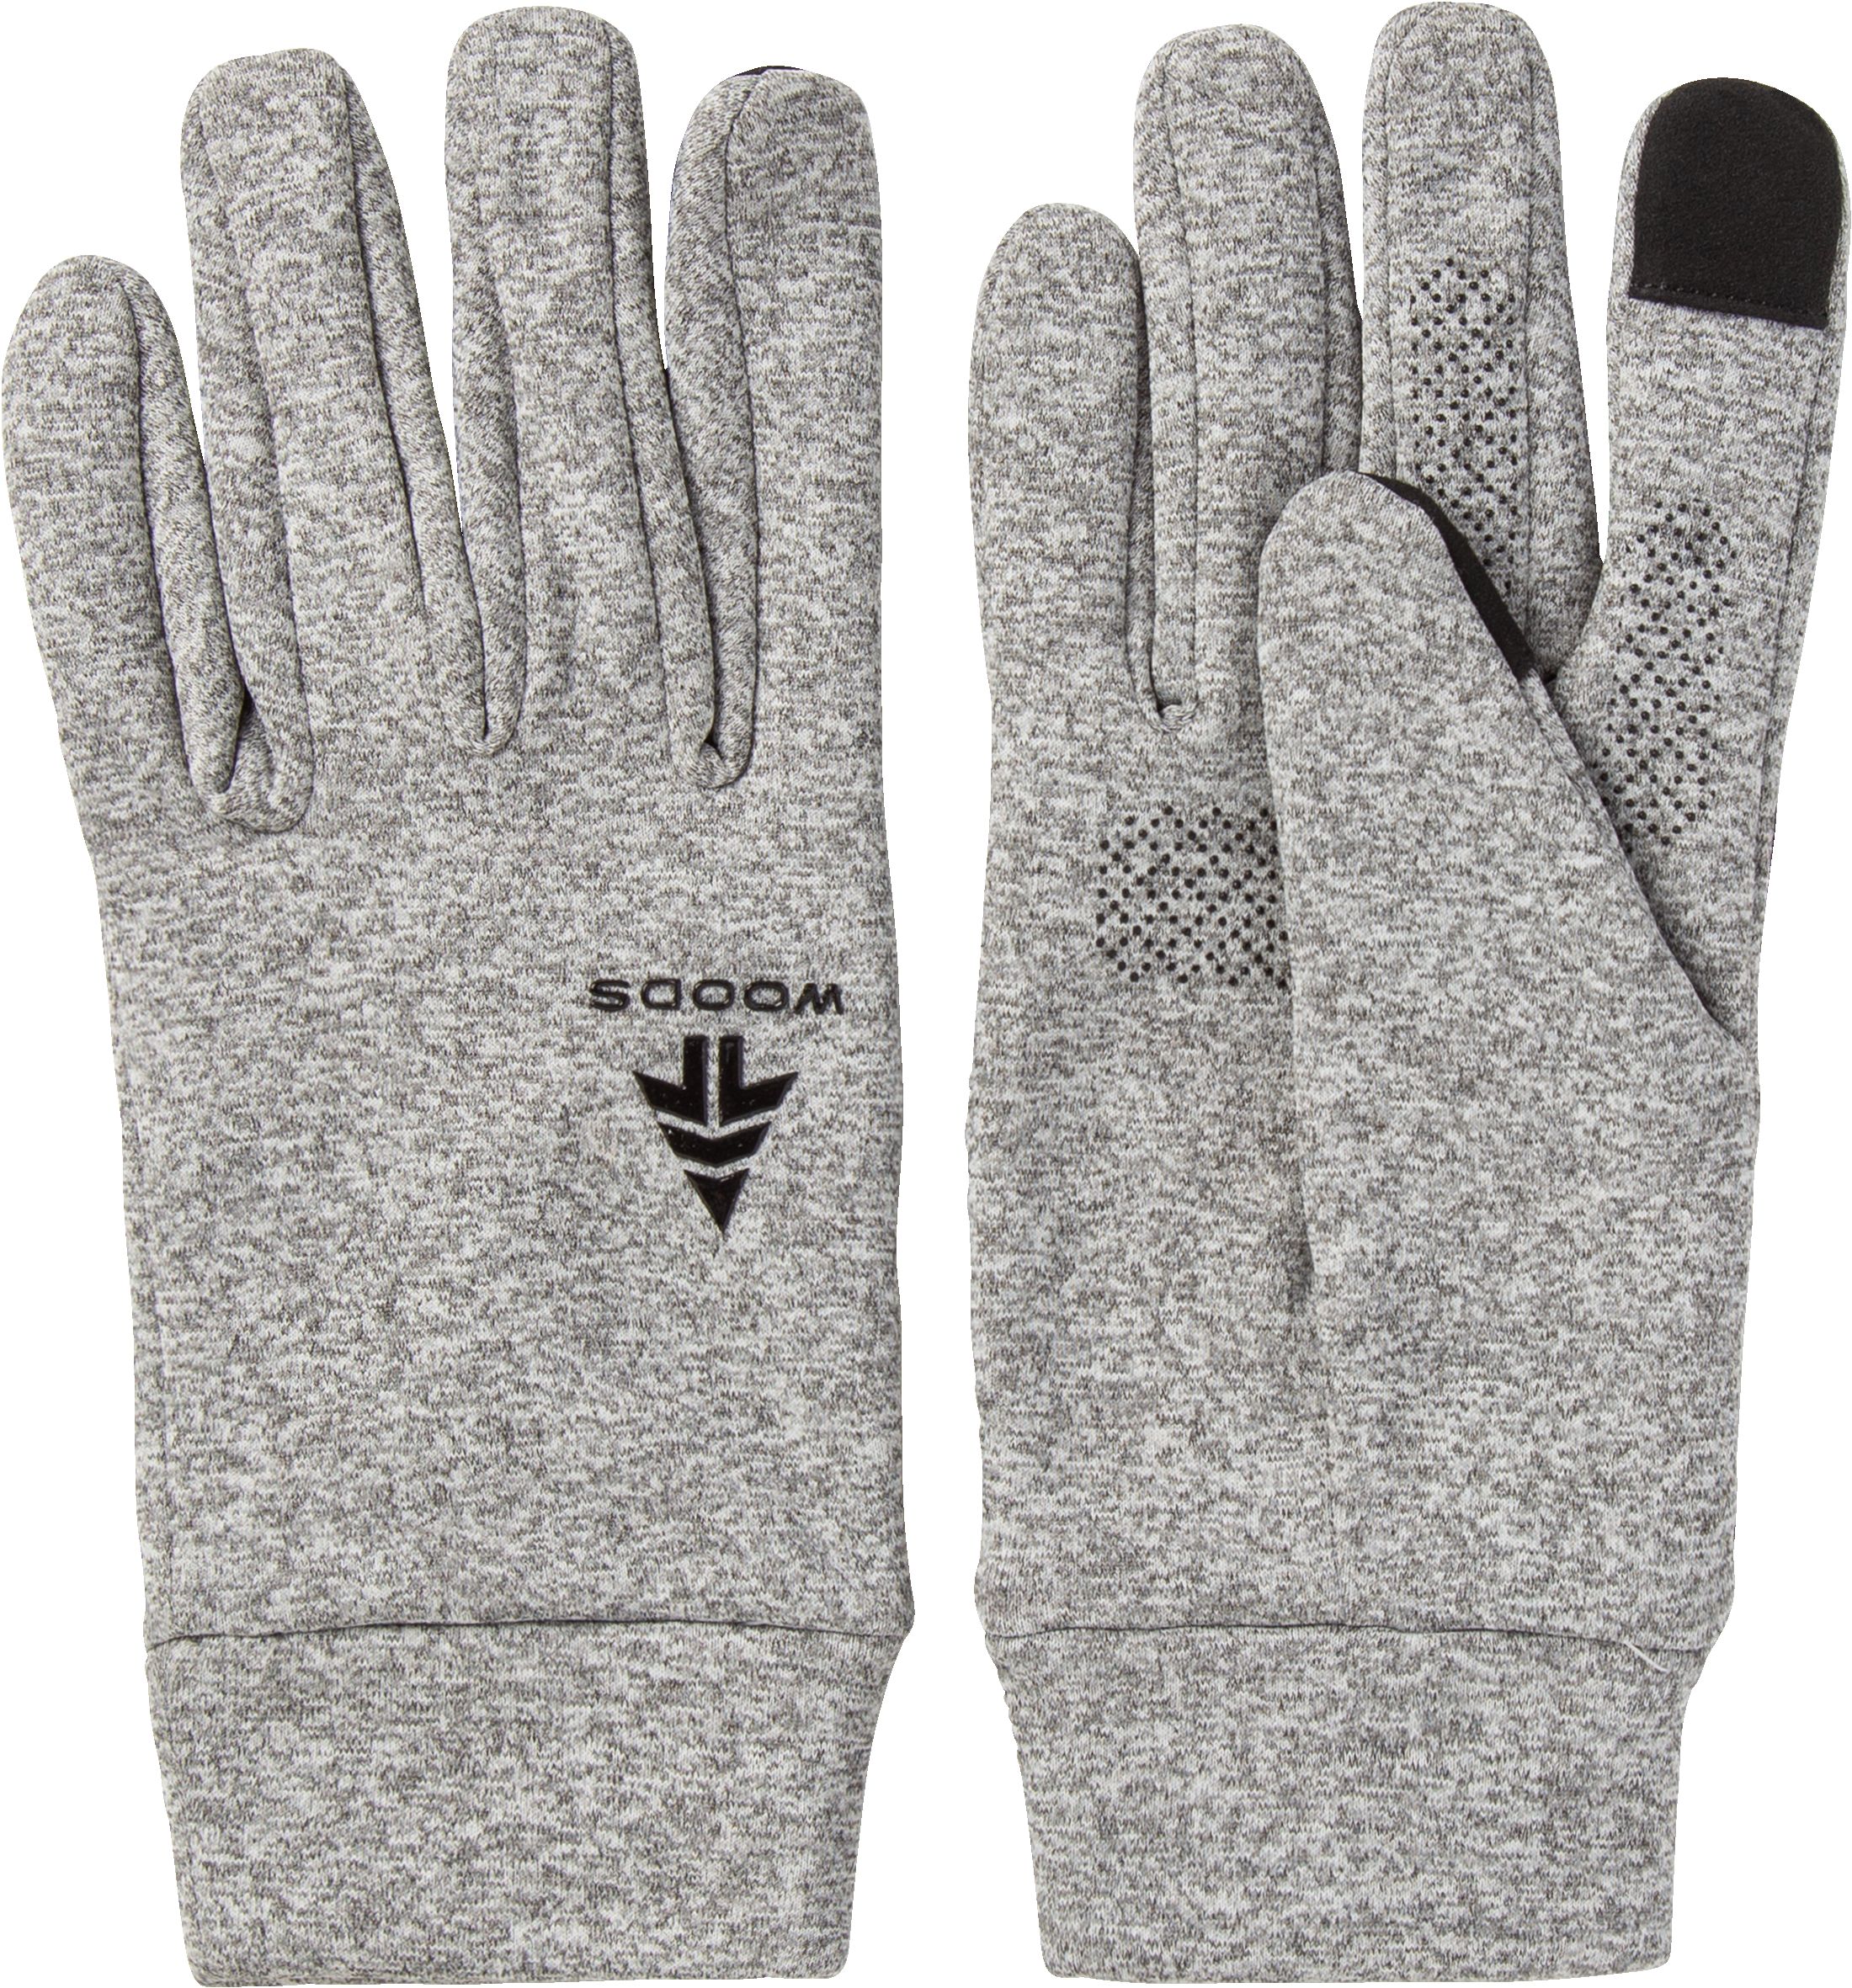 Woods Women's Jackpine Gloves